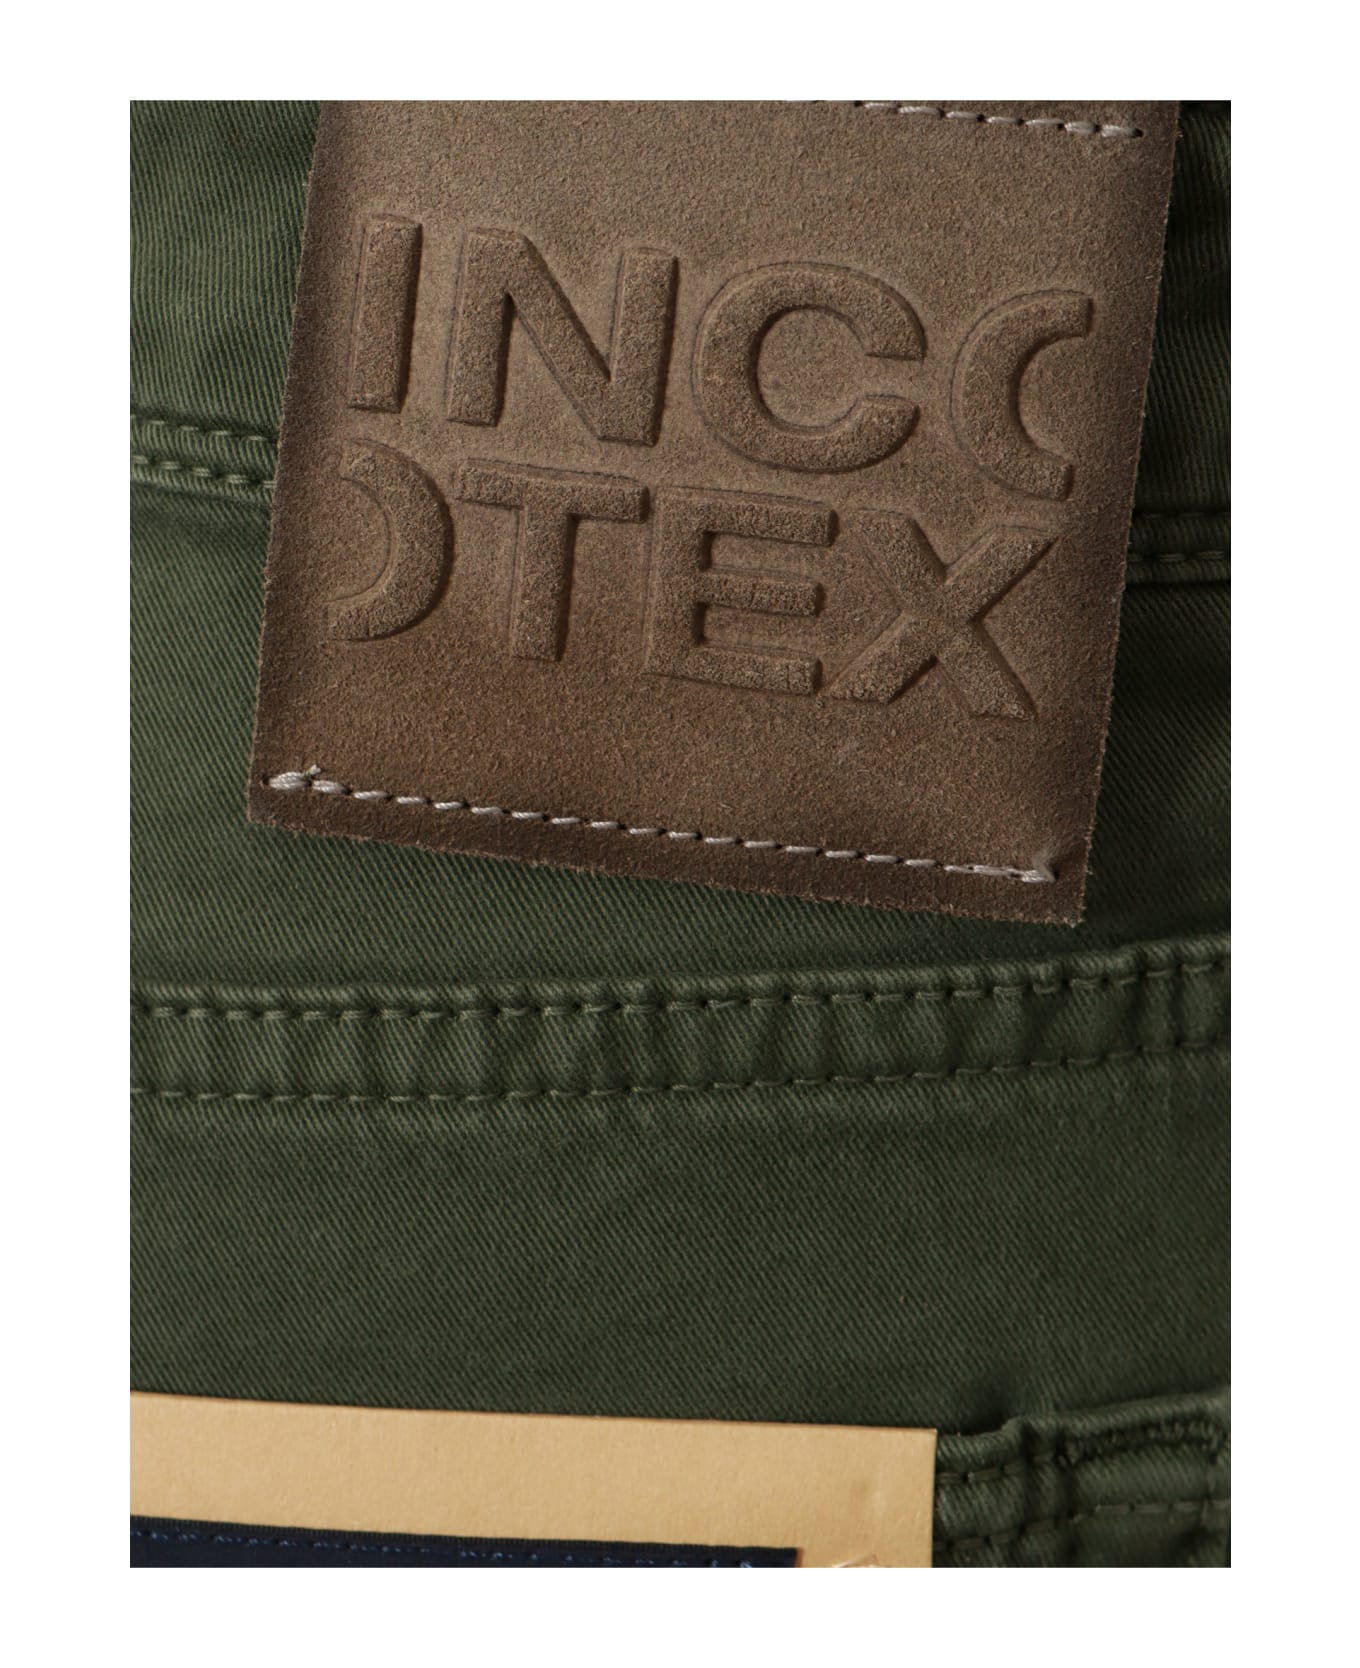 Incotex Trouser - Green